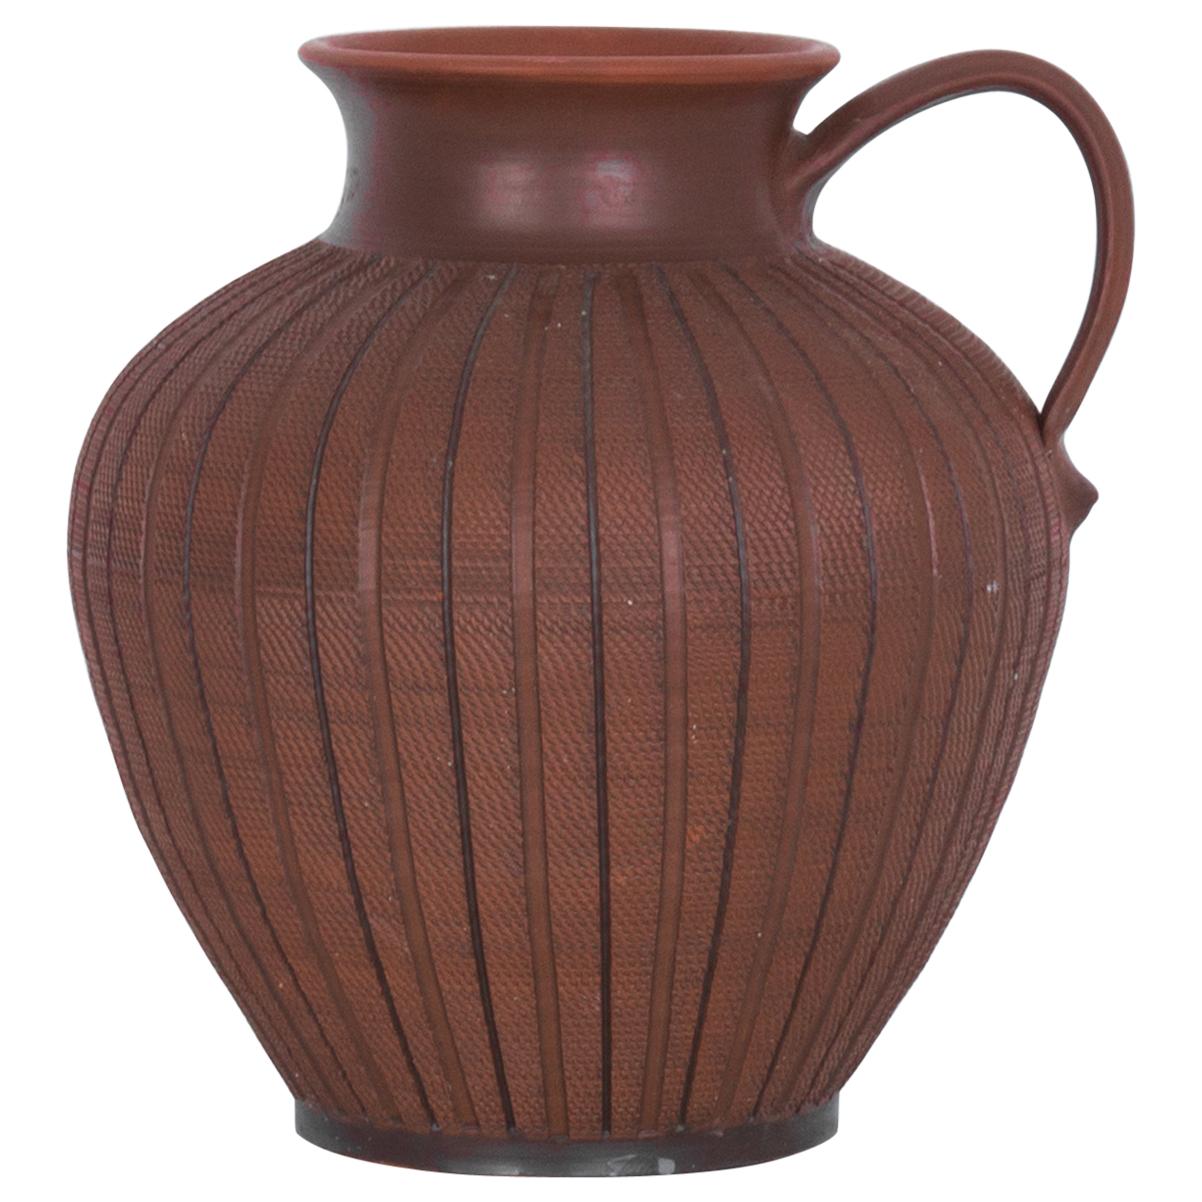 1960s Midcentury German Terracotta Striped Ceramic Vase